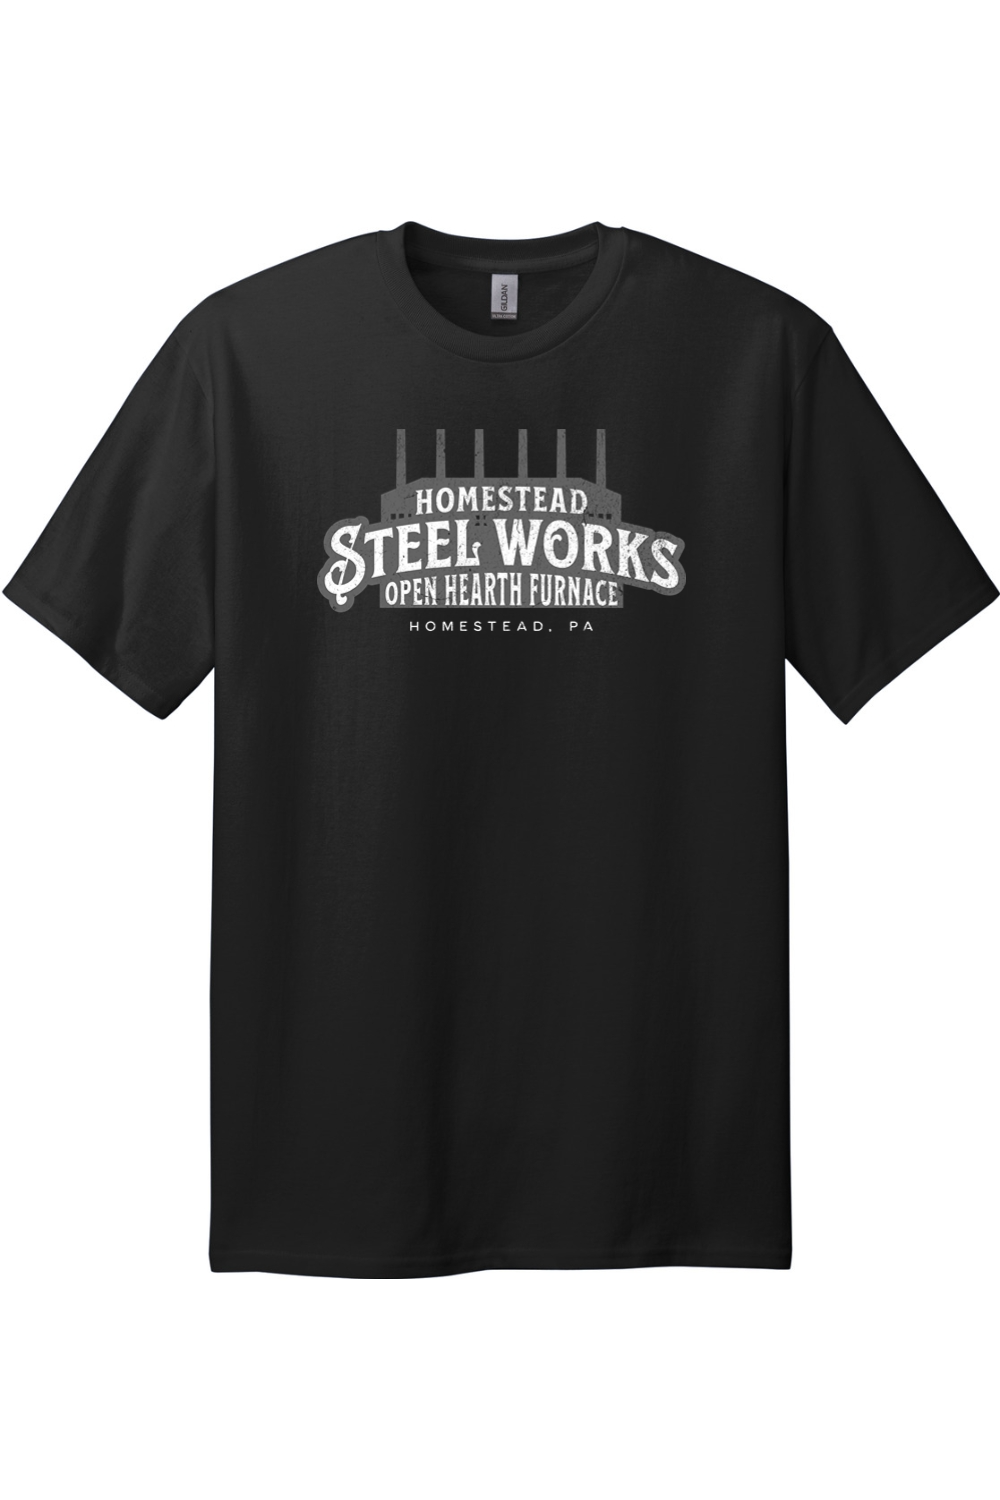 Homestead Steel Works - Open Hearth Furnace - Tall Size T-Shirt - Yinzylvania